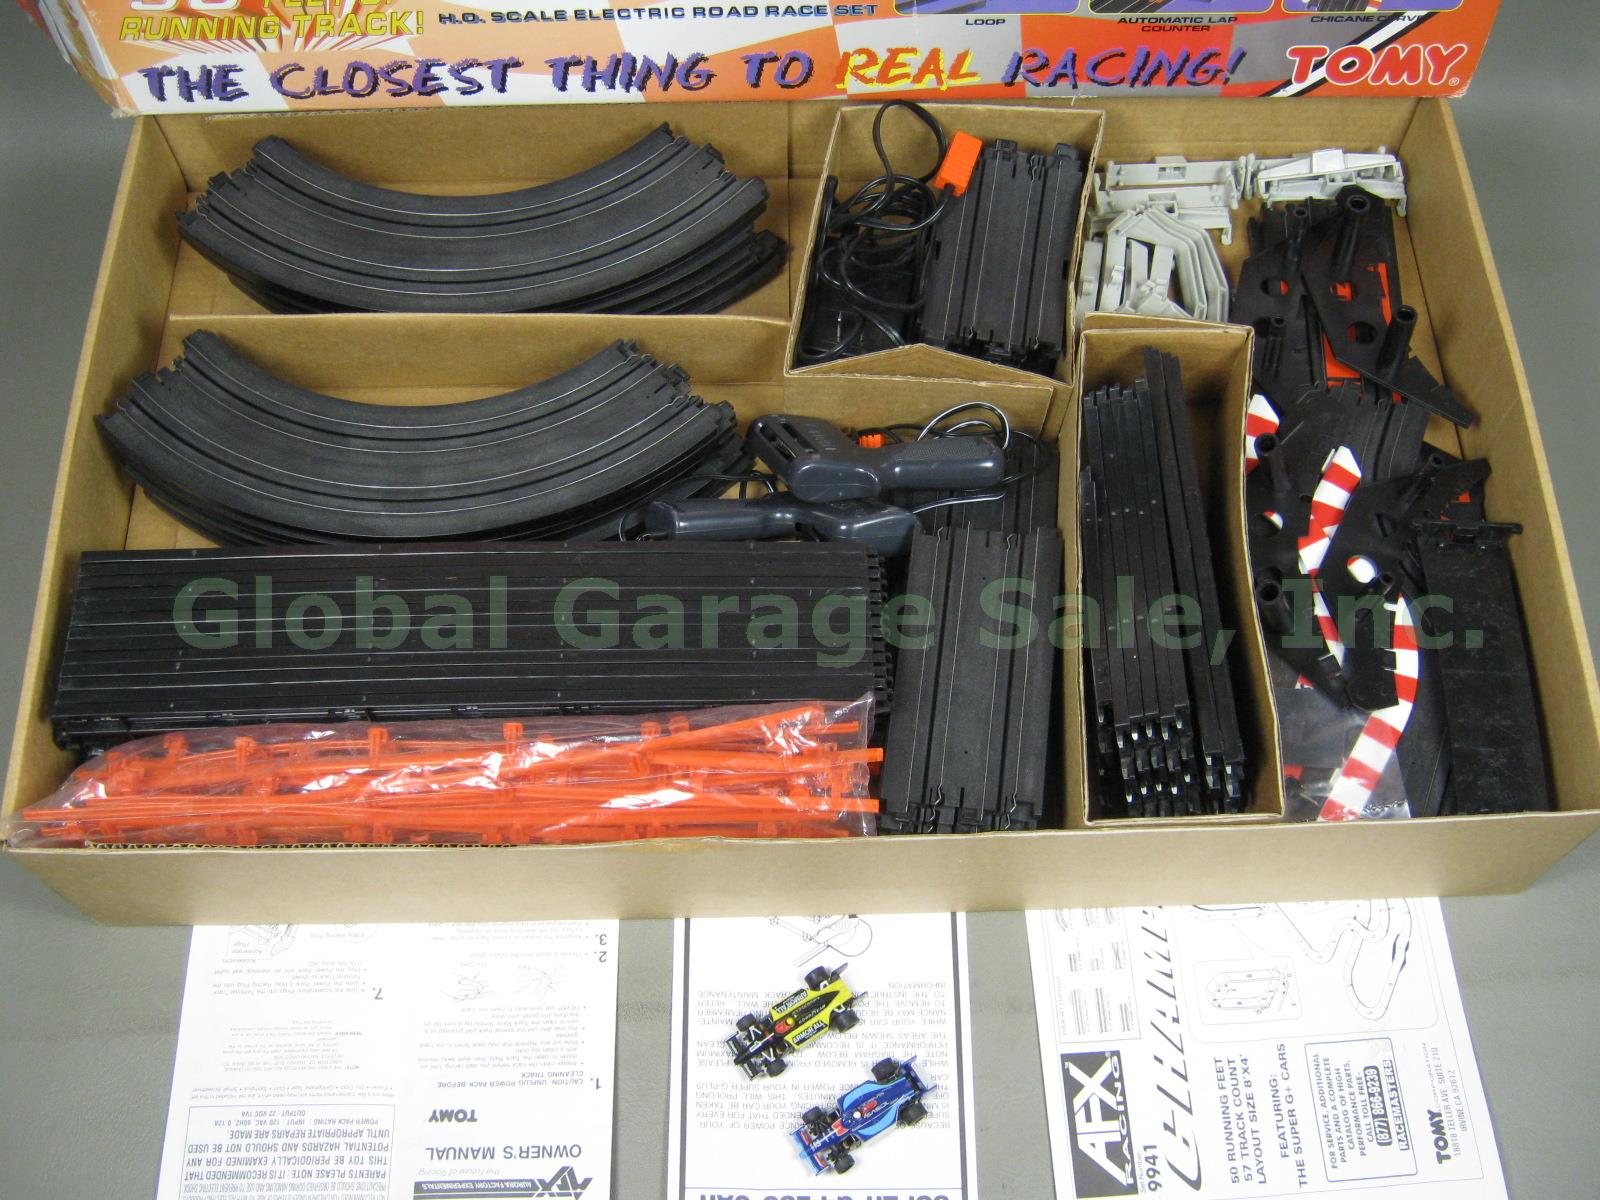 Tomy Team AFX Super G Plus Champion Rally Electric Slot Car Race Track Set #9941 1